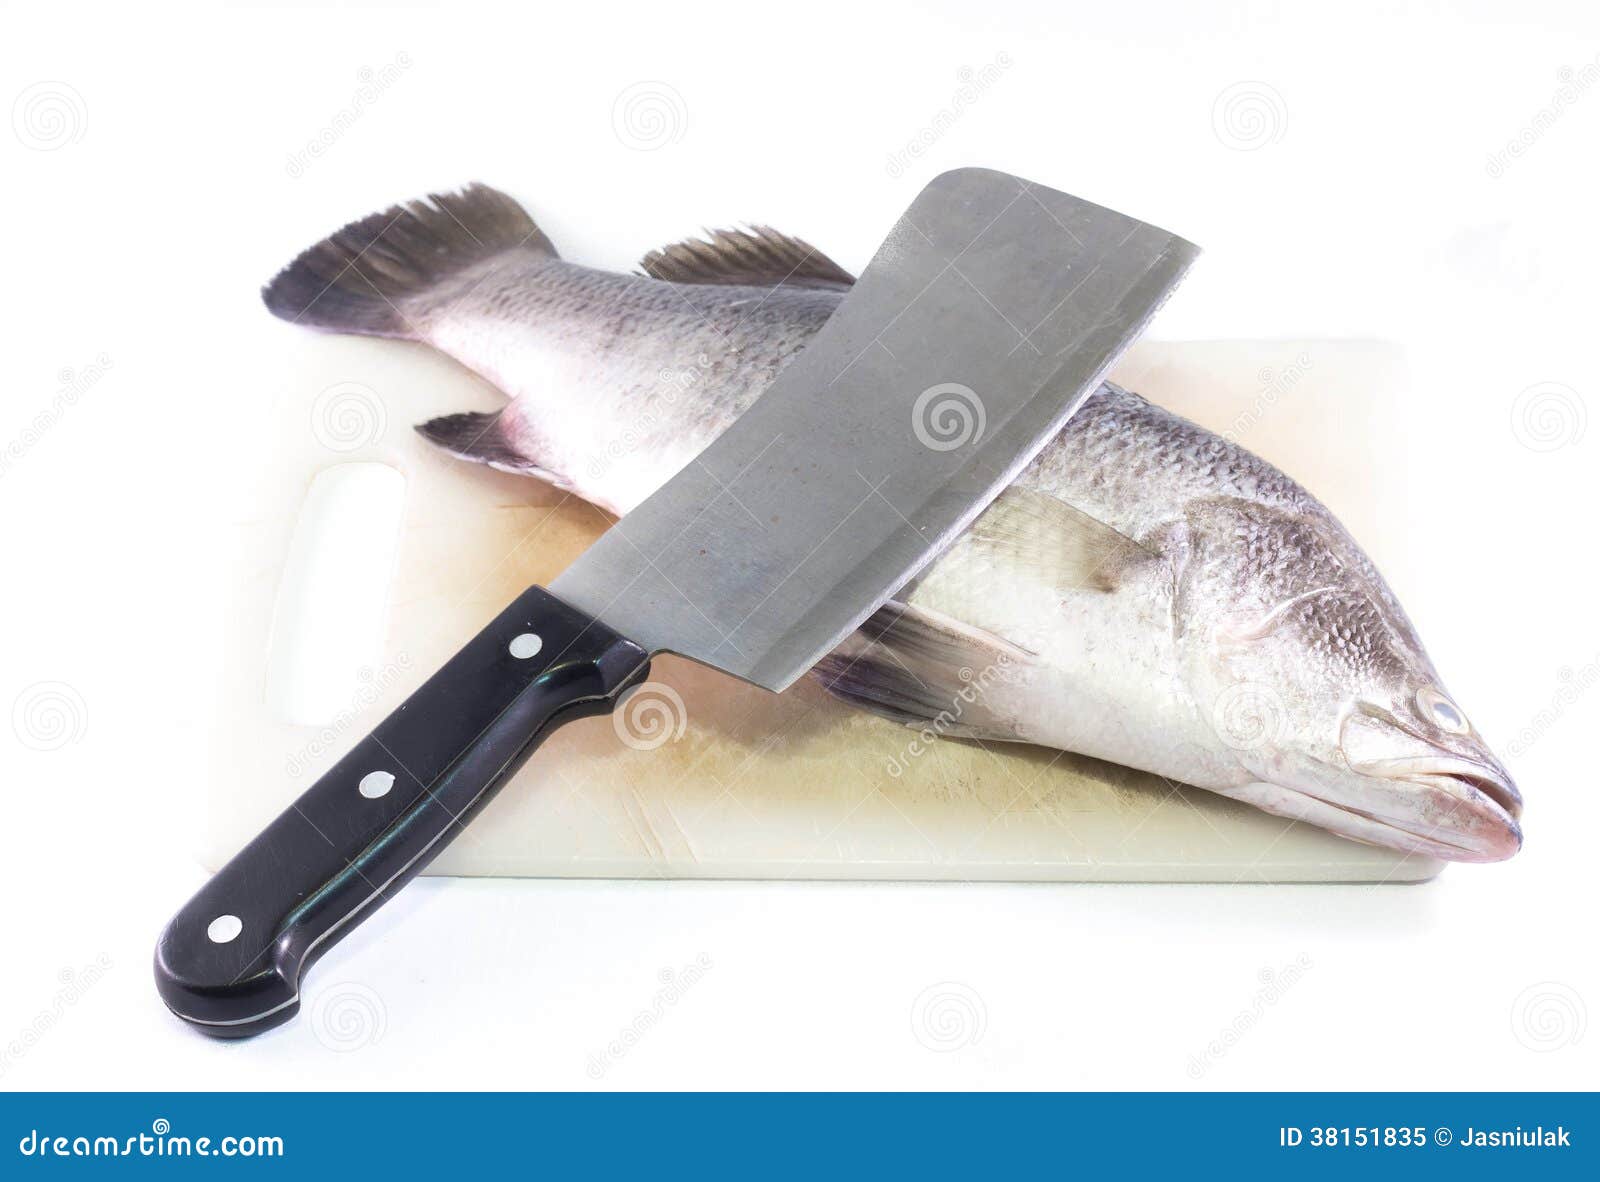 fish-knife-cutting-board-38151835.jpg